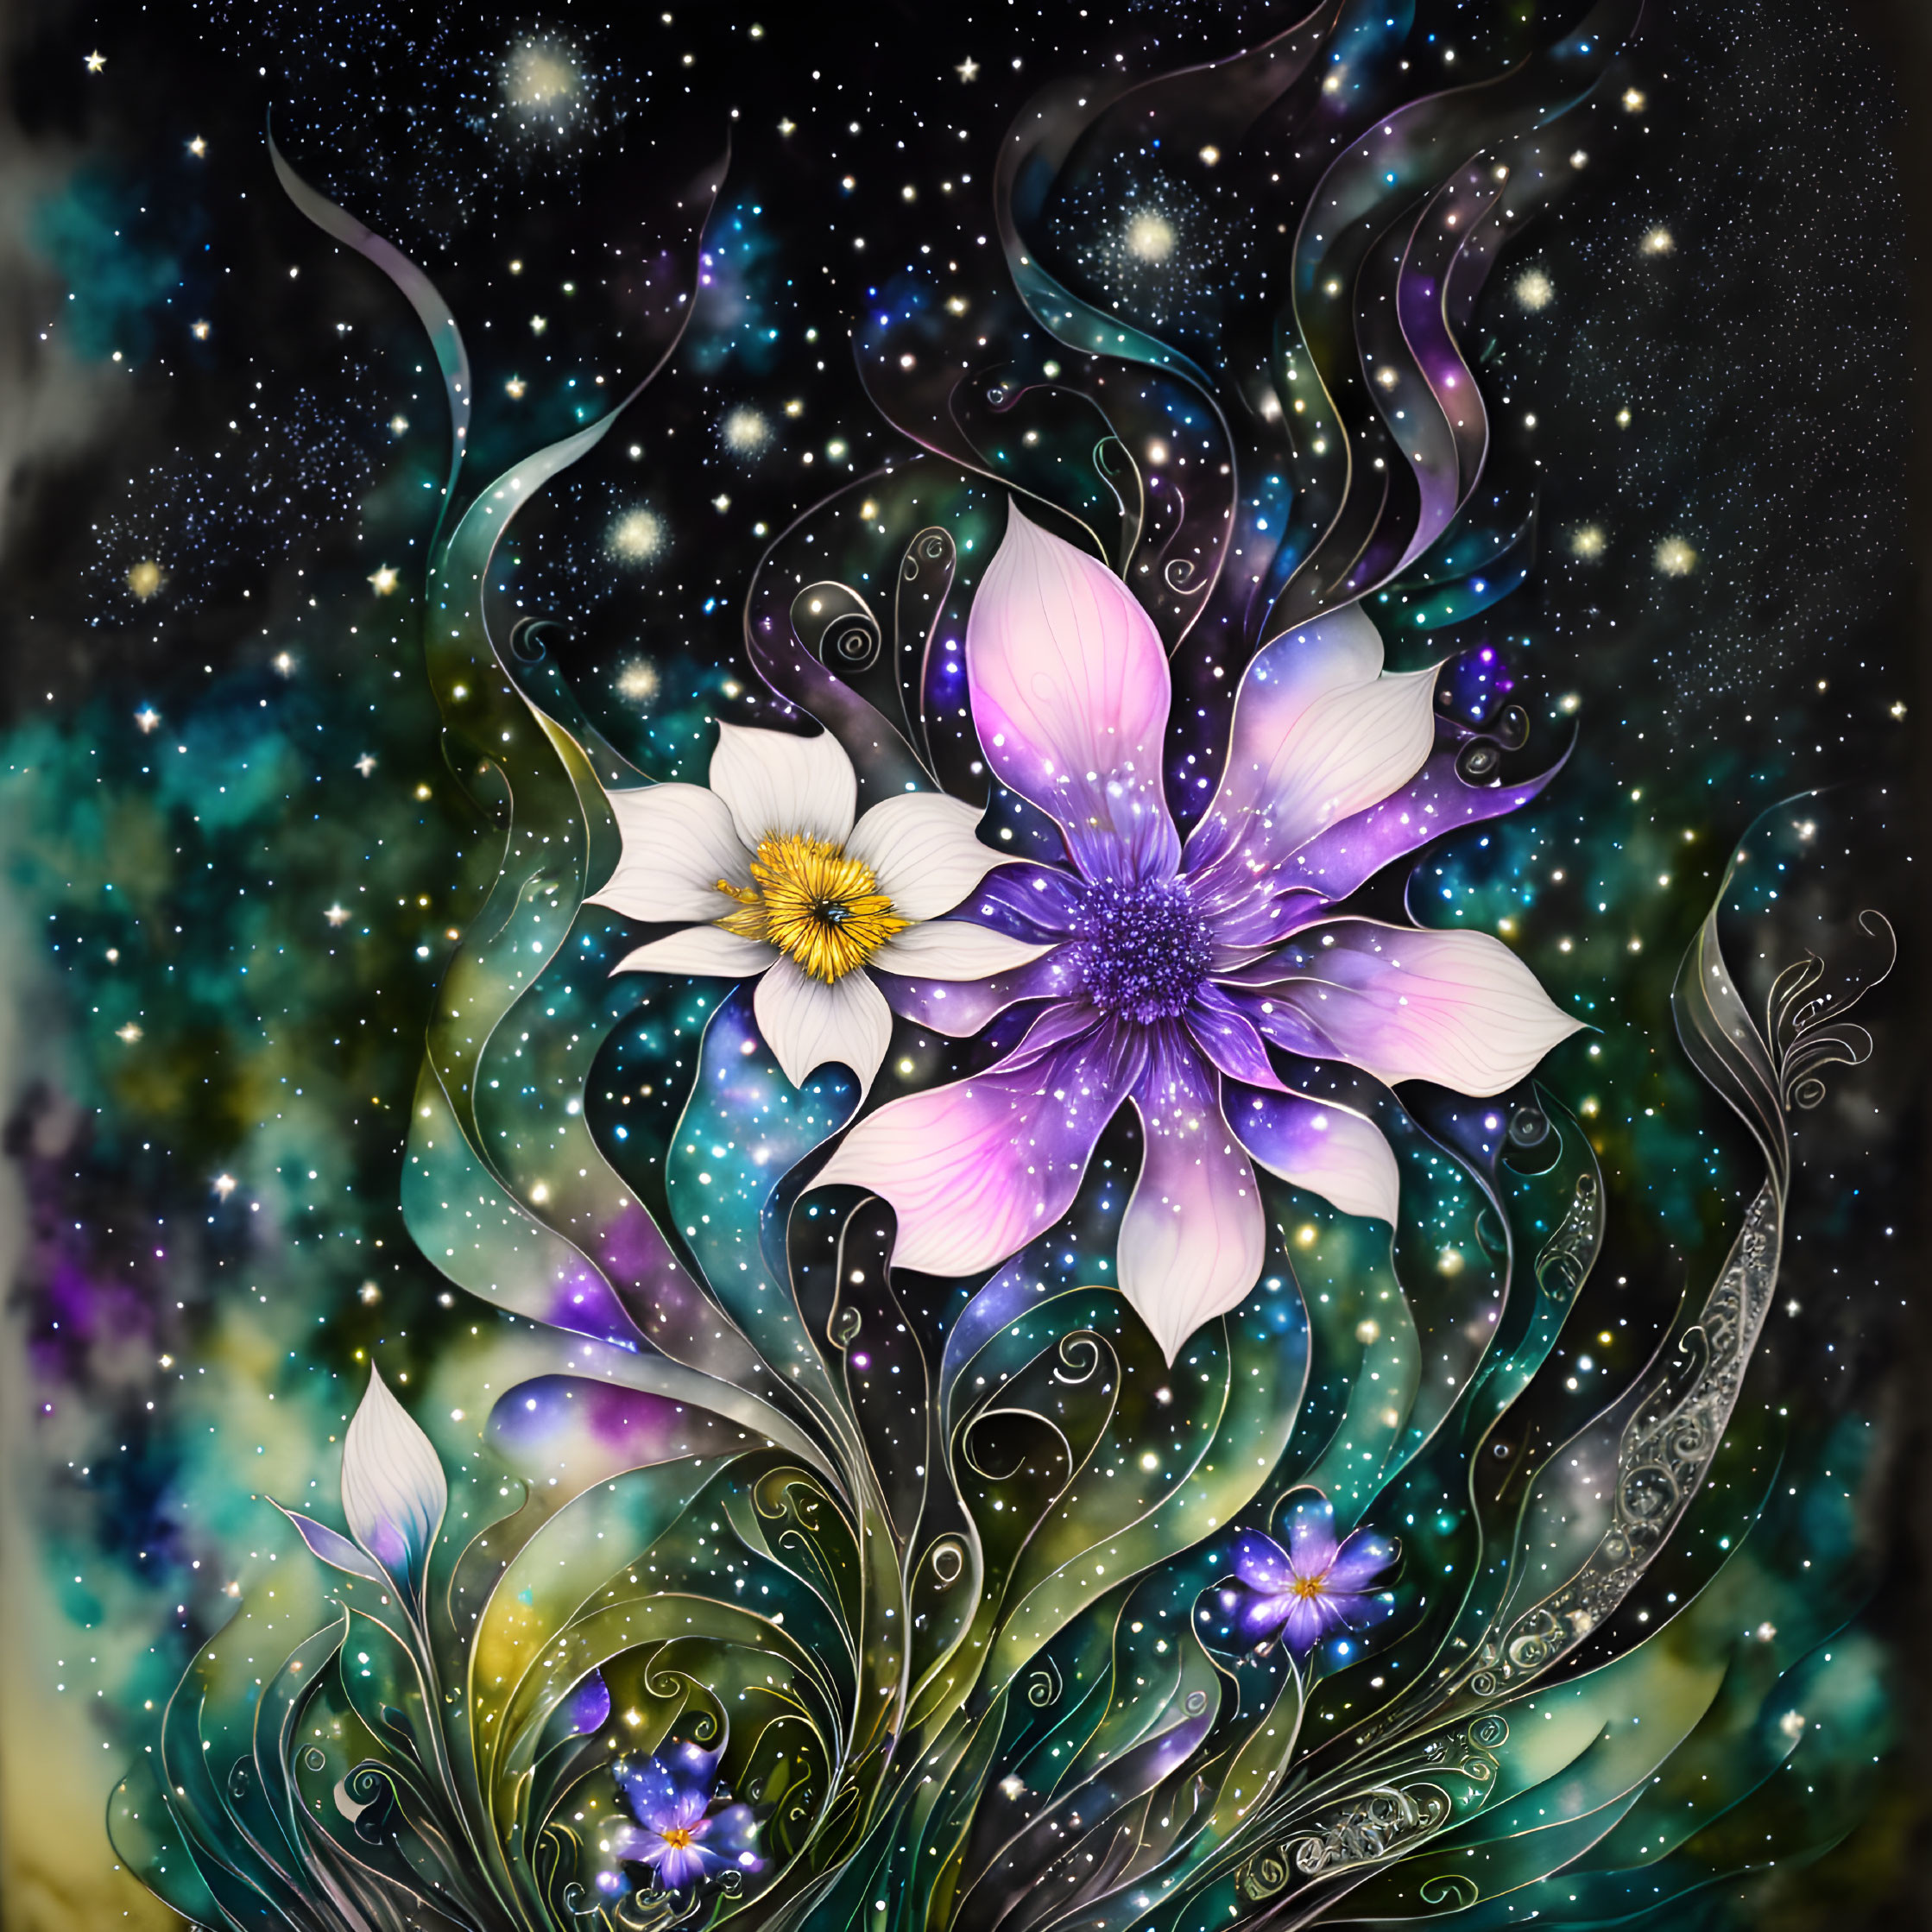 Celestial Blossoms: A Cosmic Symphony